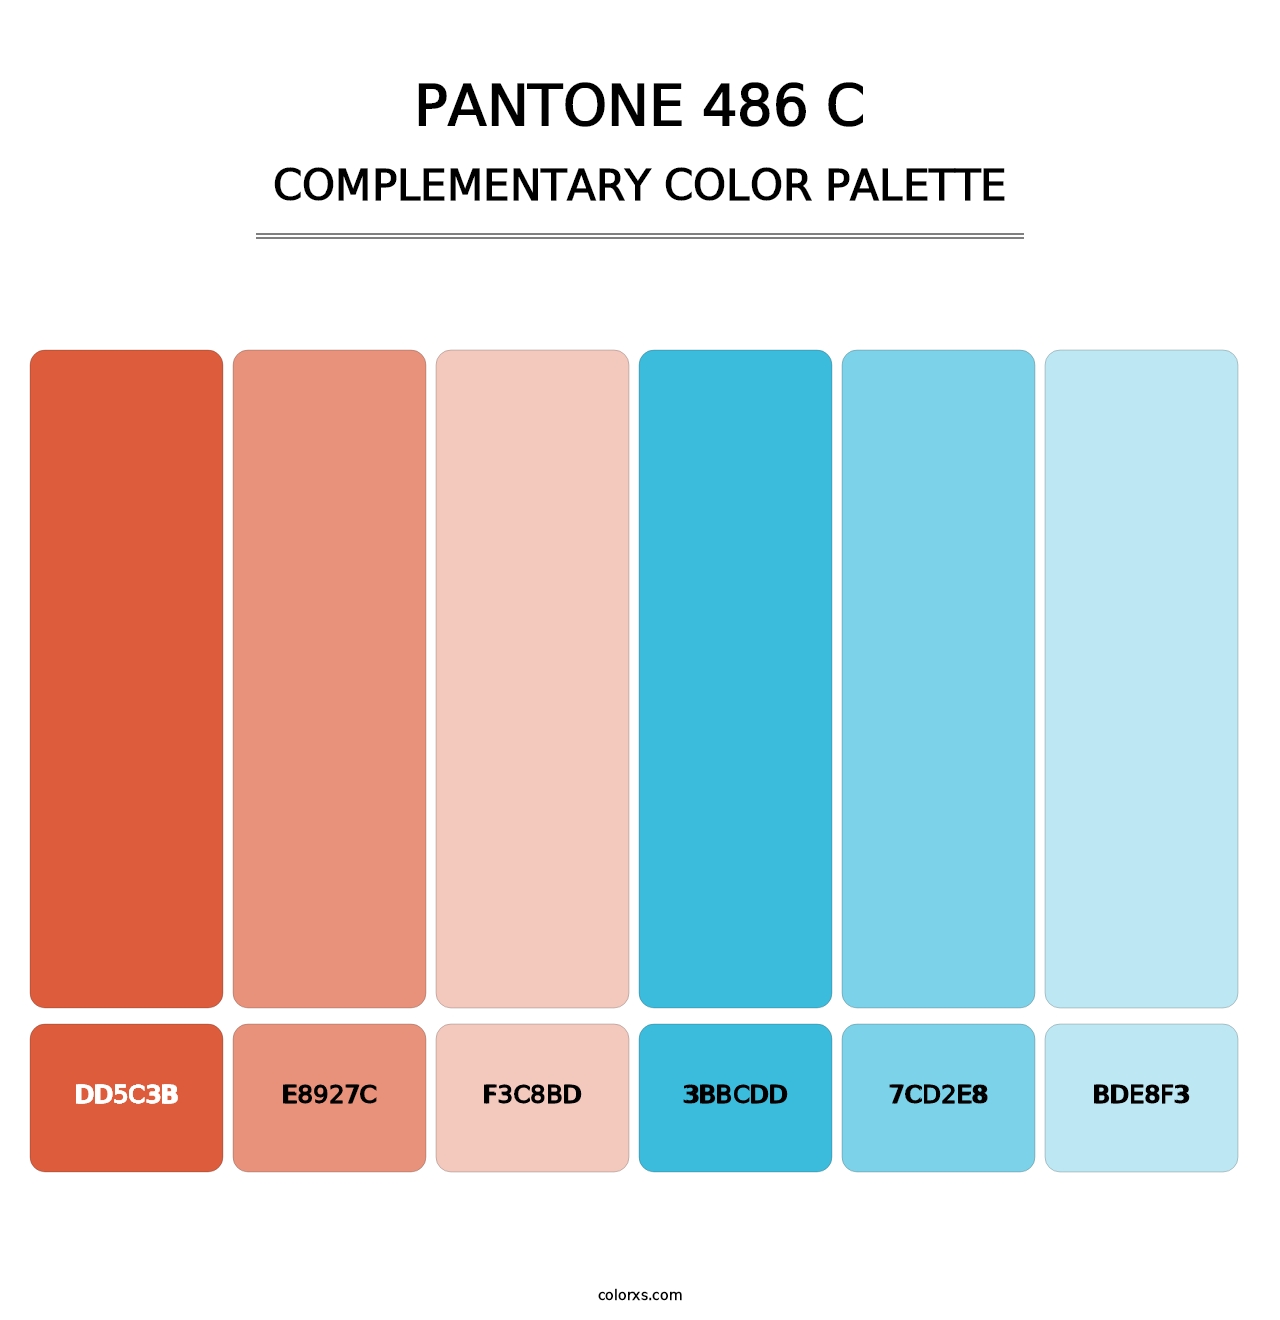 PANTONE 486 C - Complementary Color Palette